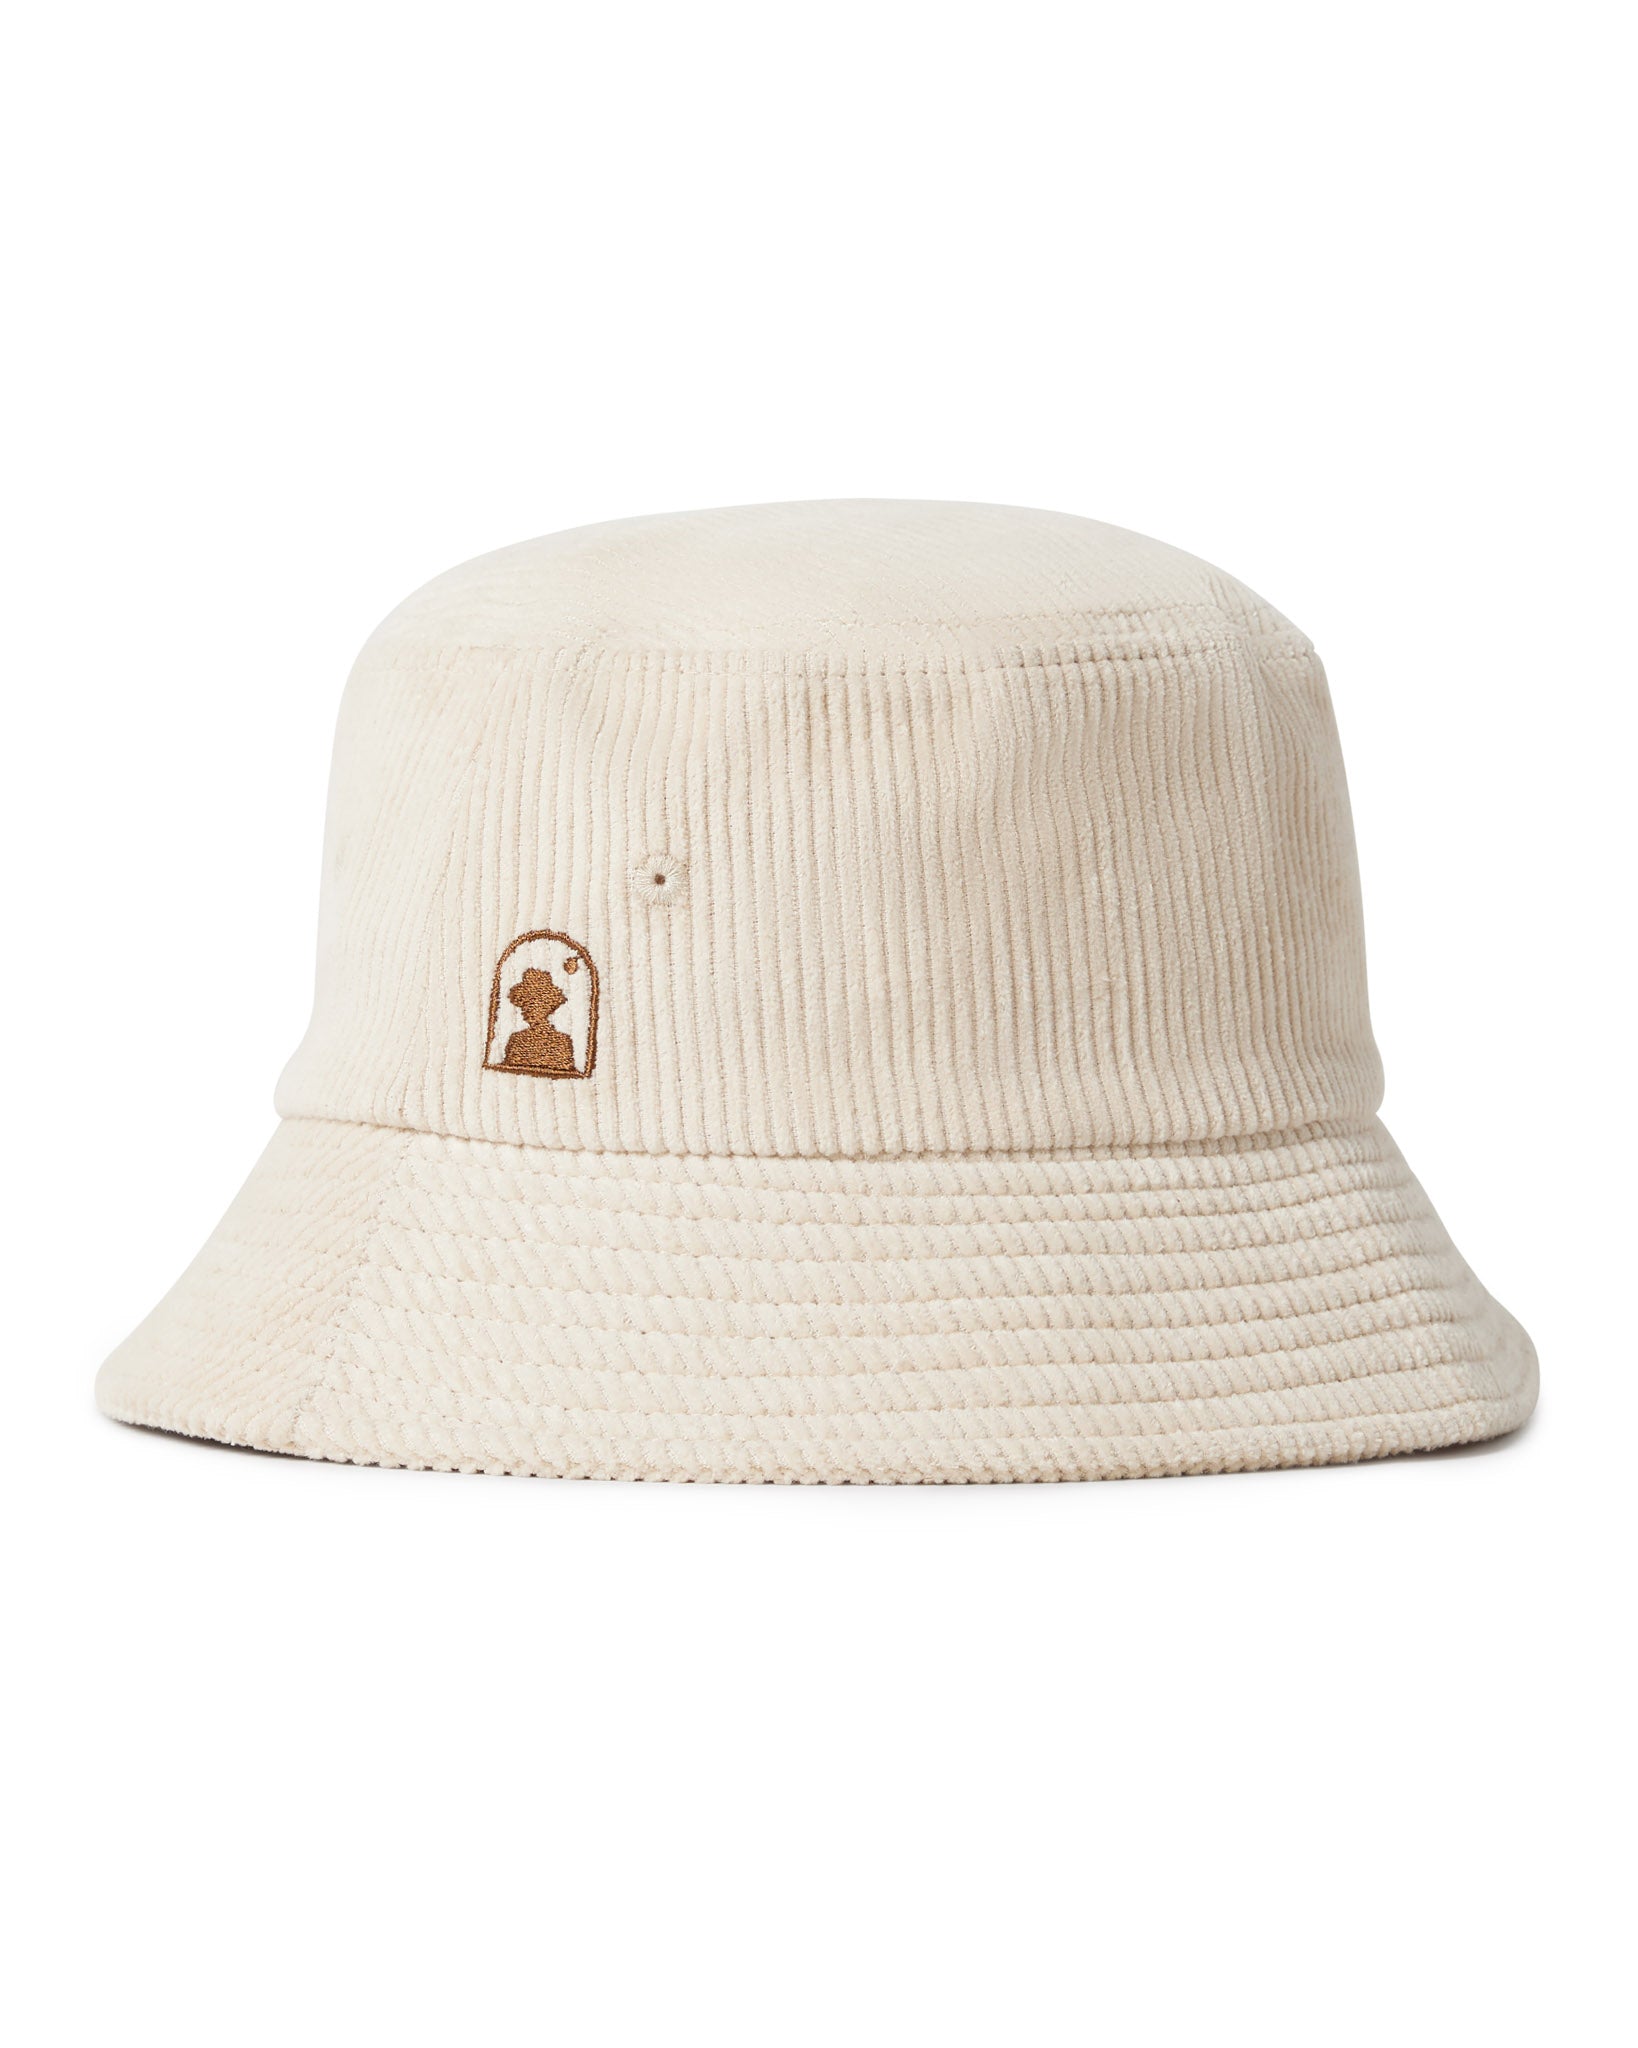 The Corsica Corduroy Bucket Hat - Alabaster White S/M